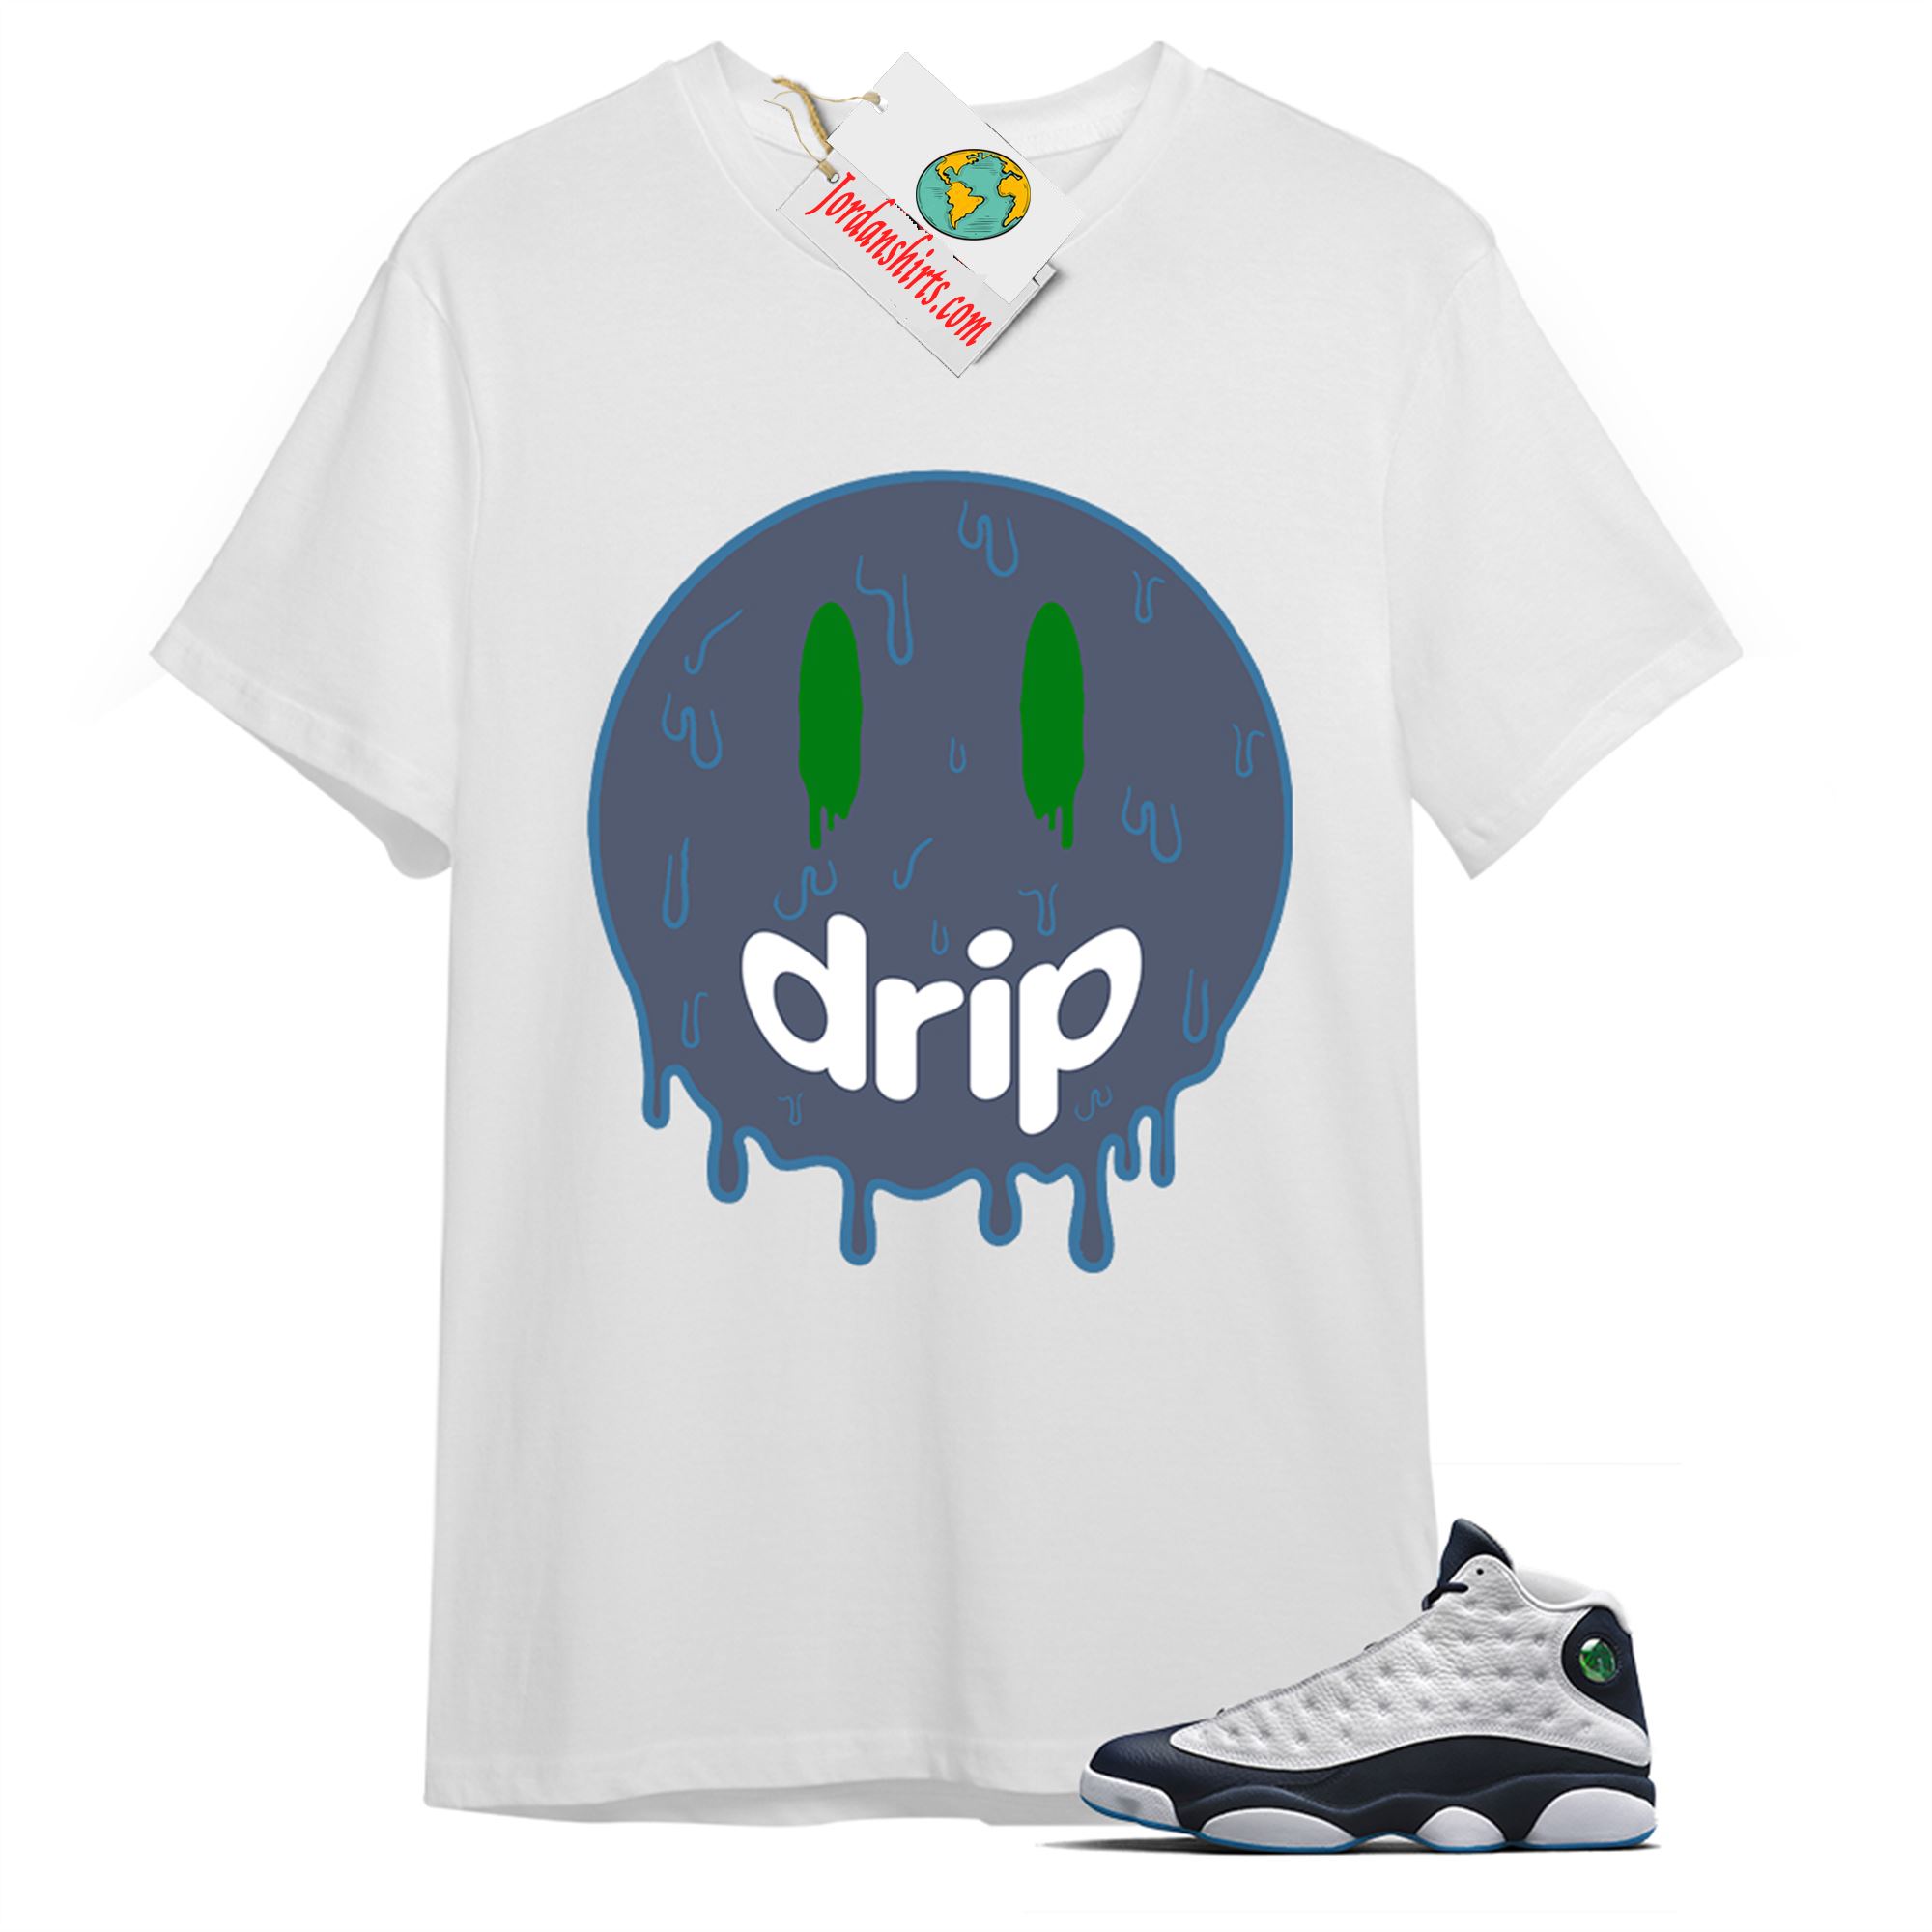 Jordan 13 Shirt, Drip White T-shirt Air Jordan 13 Obsidian 13s Full Size Up To 5xl